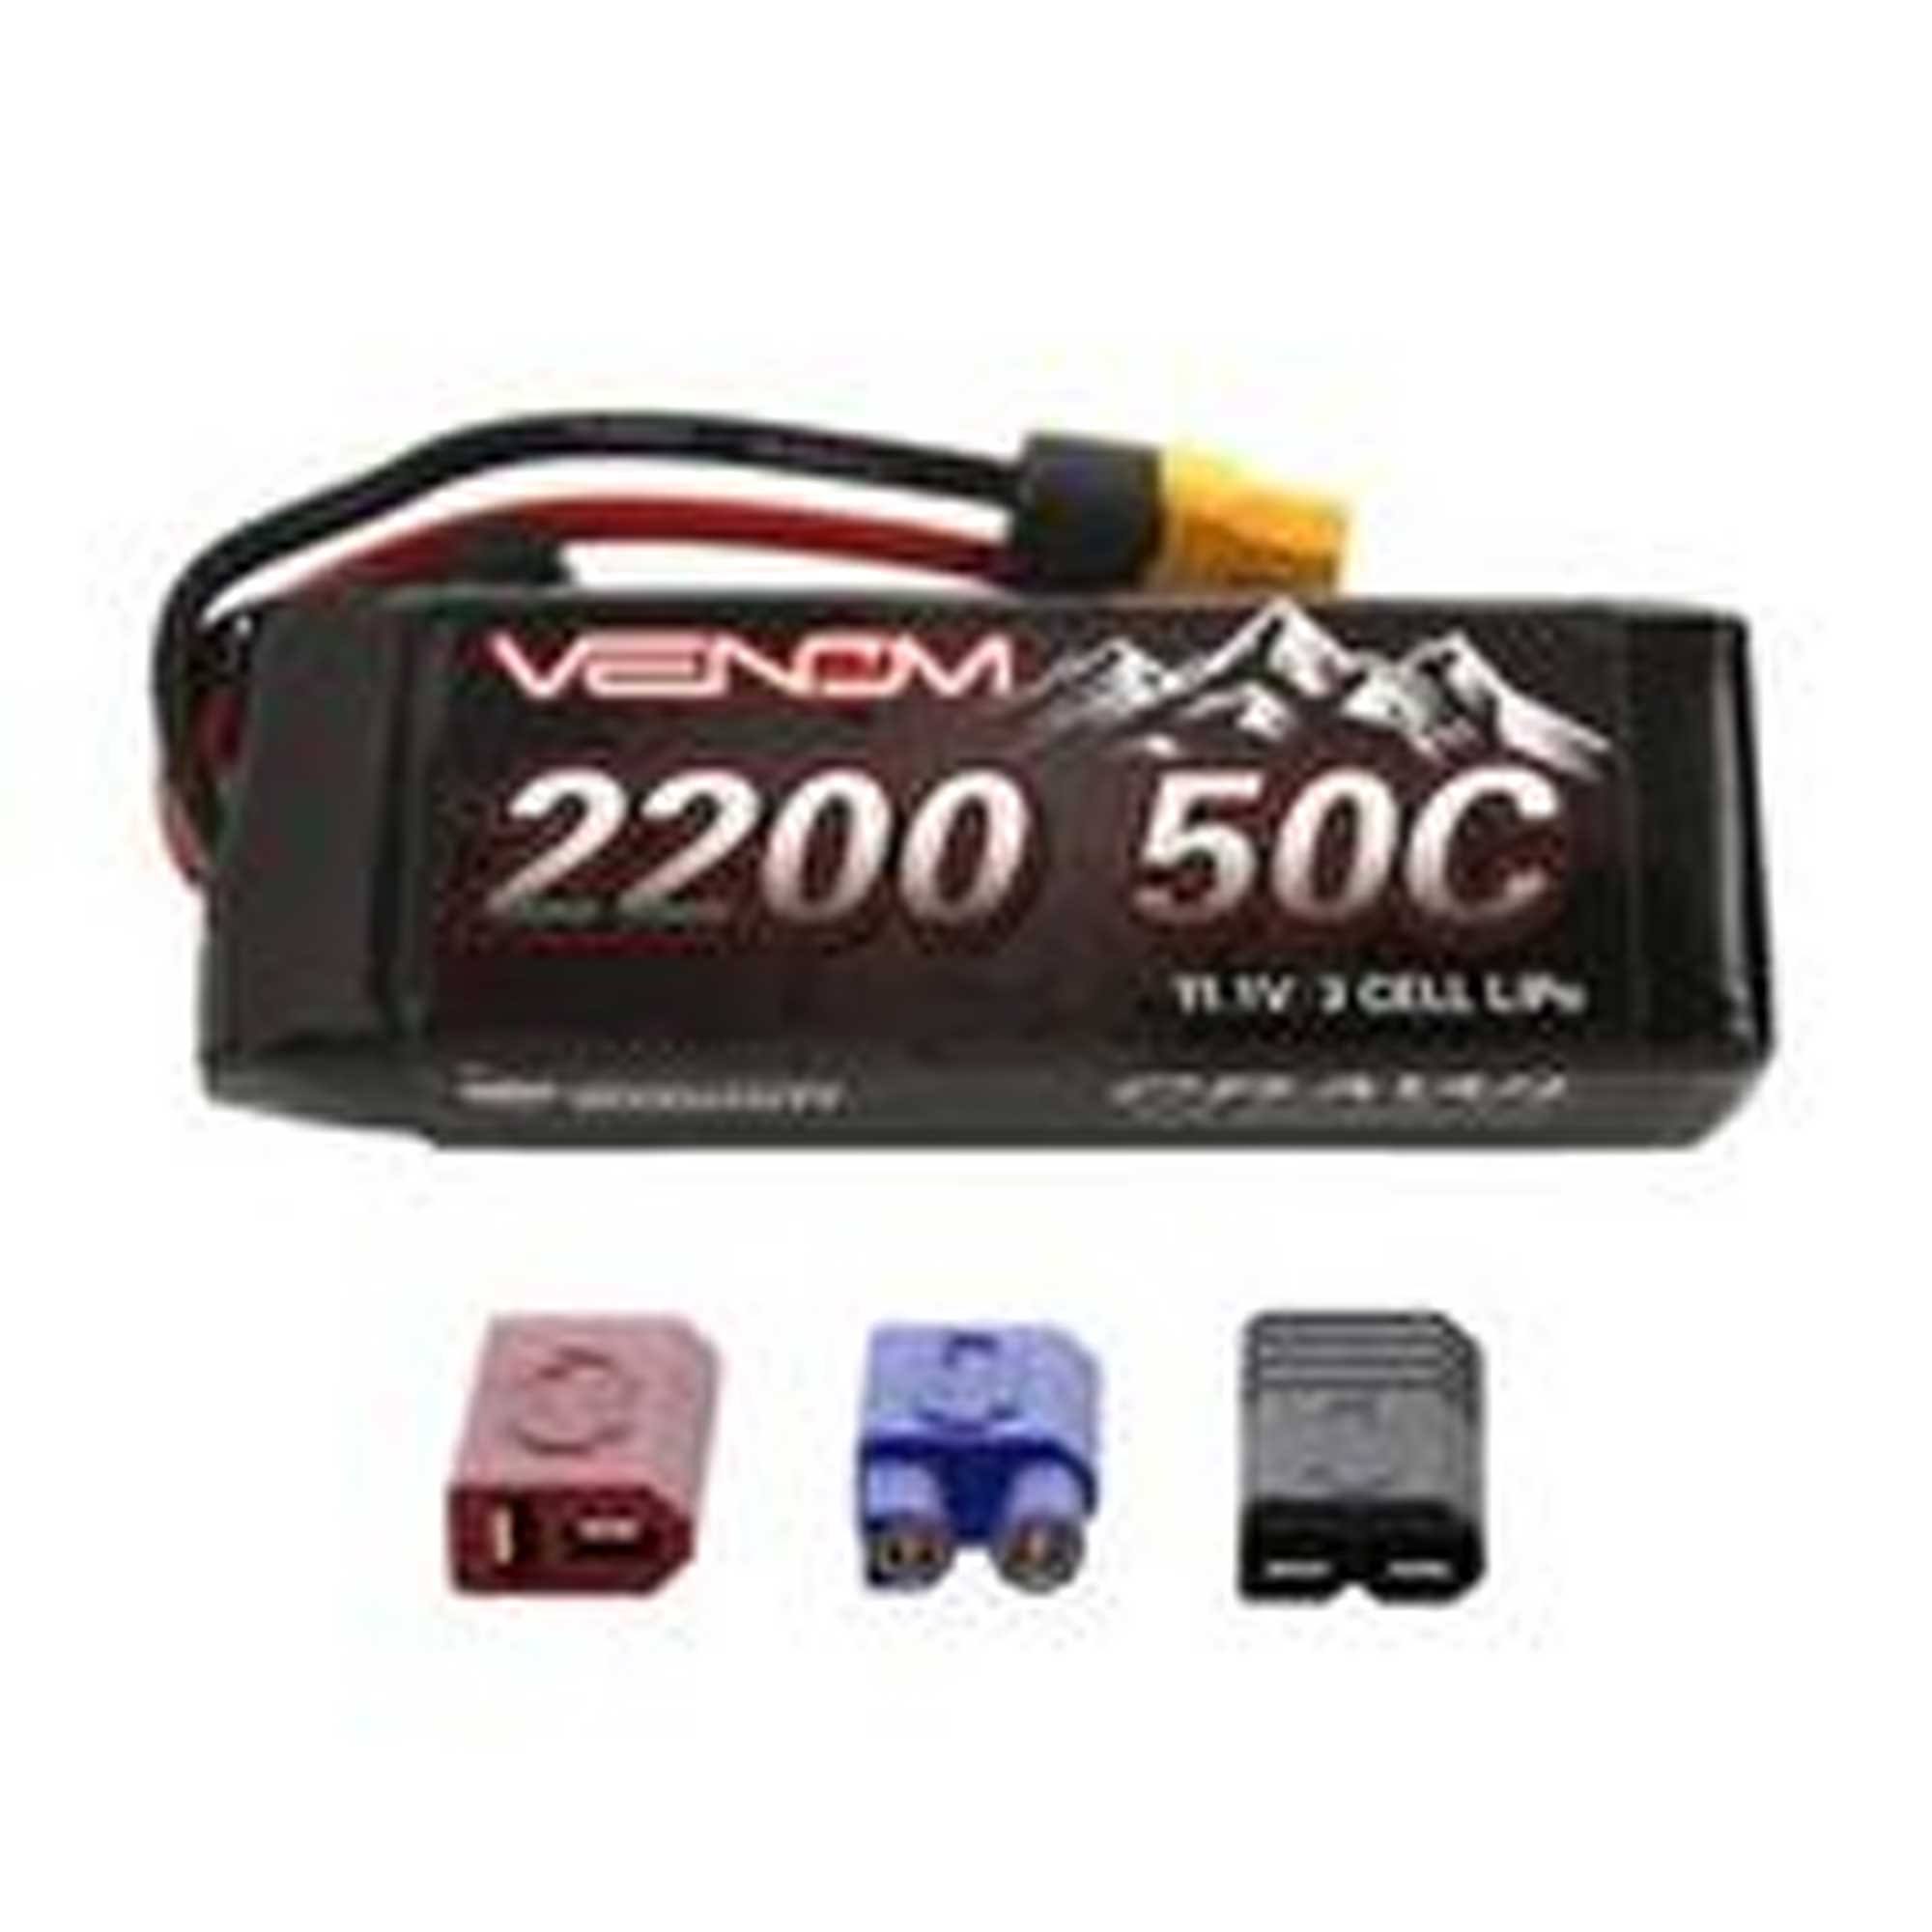 Venom Group DRIVE Crawl 11.1V 2200mAh 50C 3S LiPo Battery with Universal 2.0 Plug, Batteries